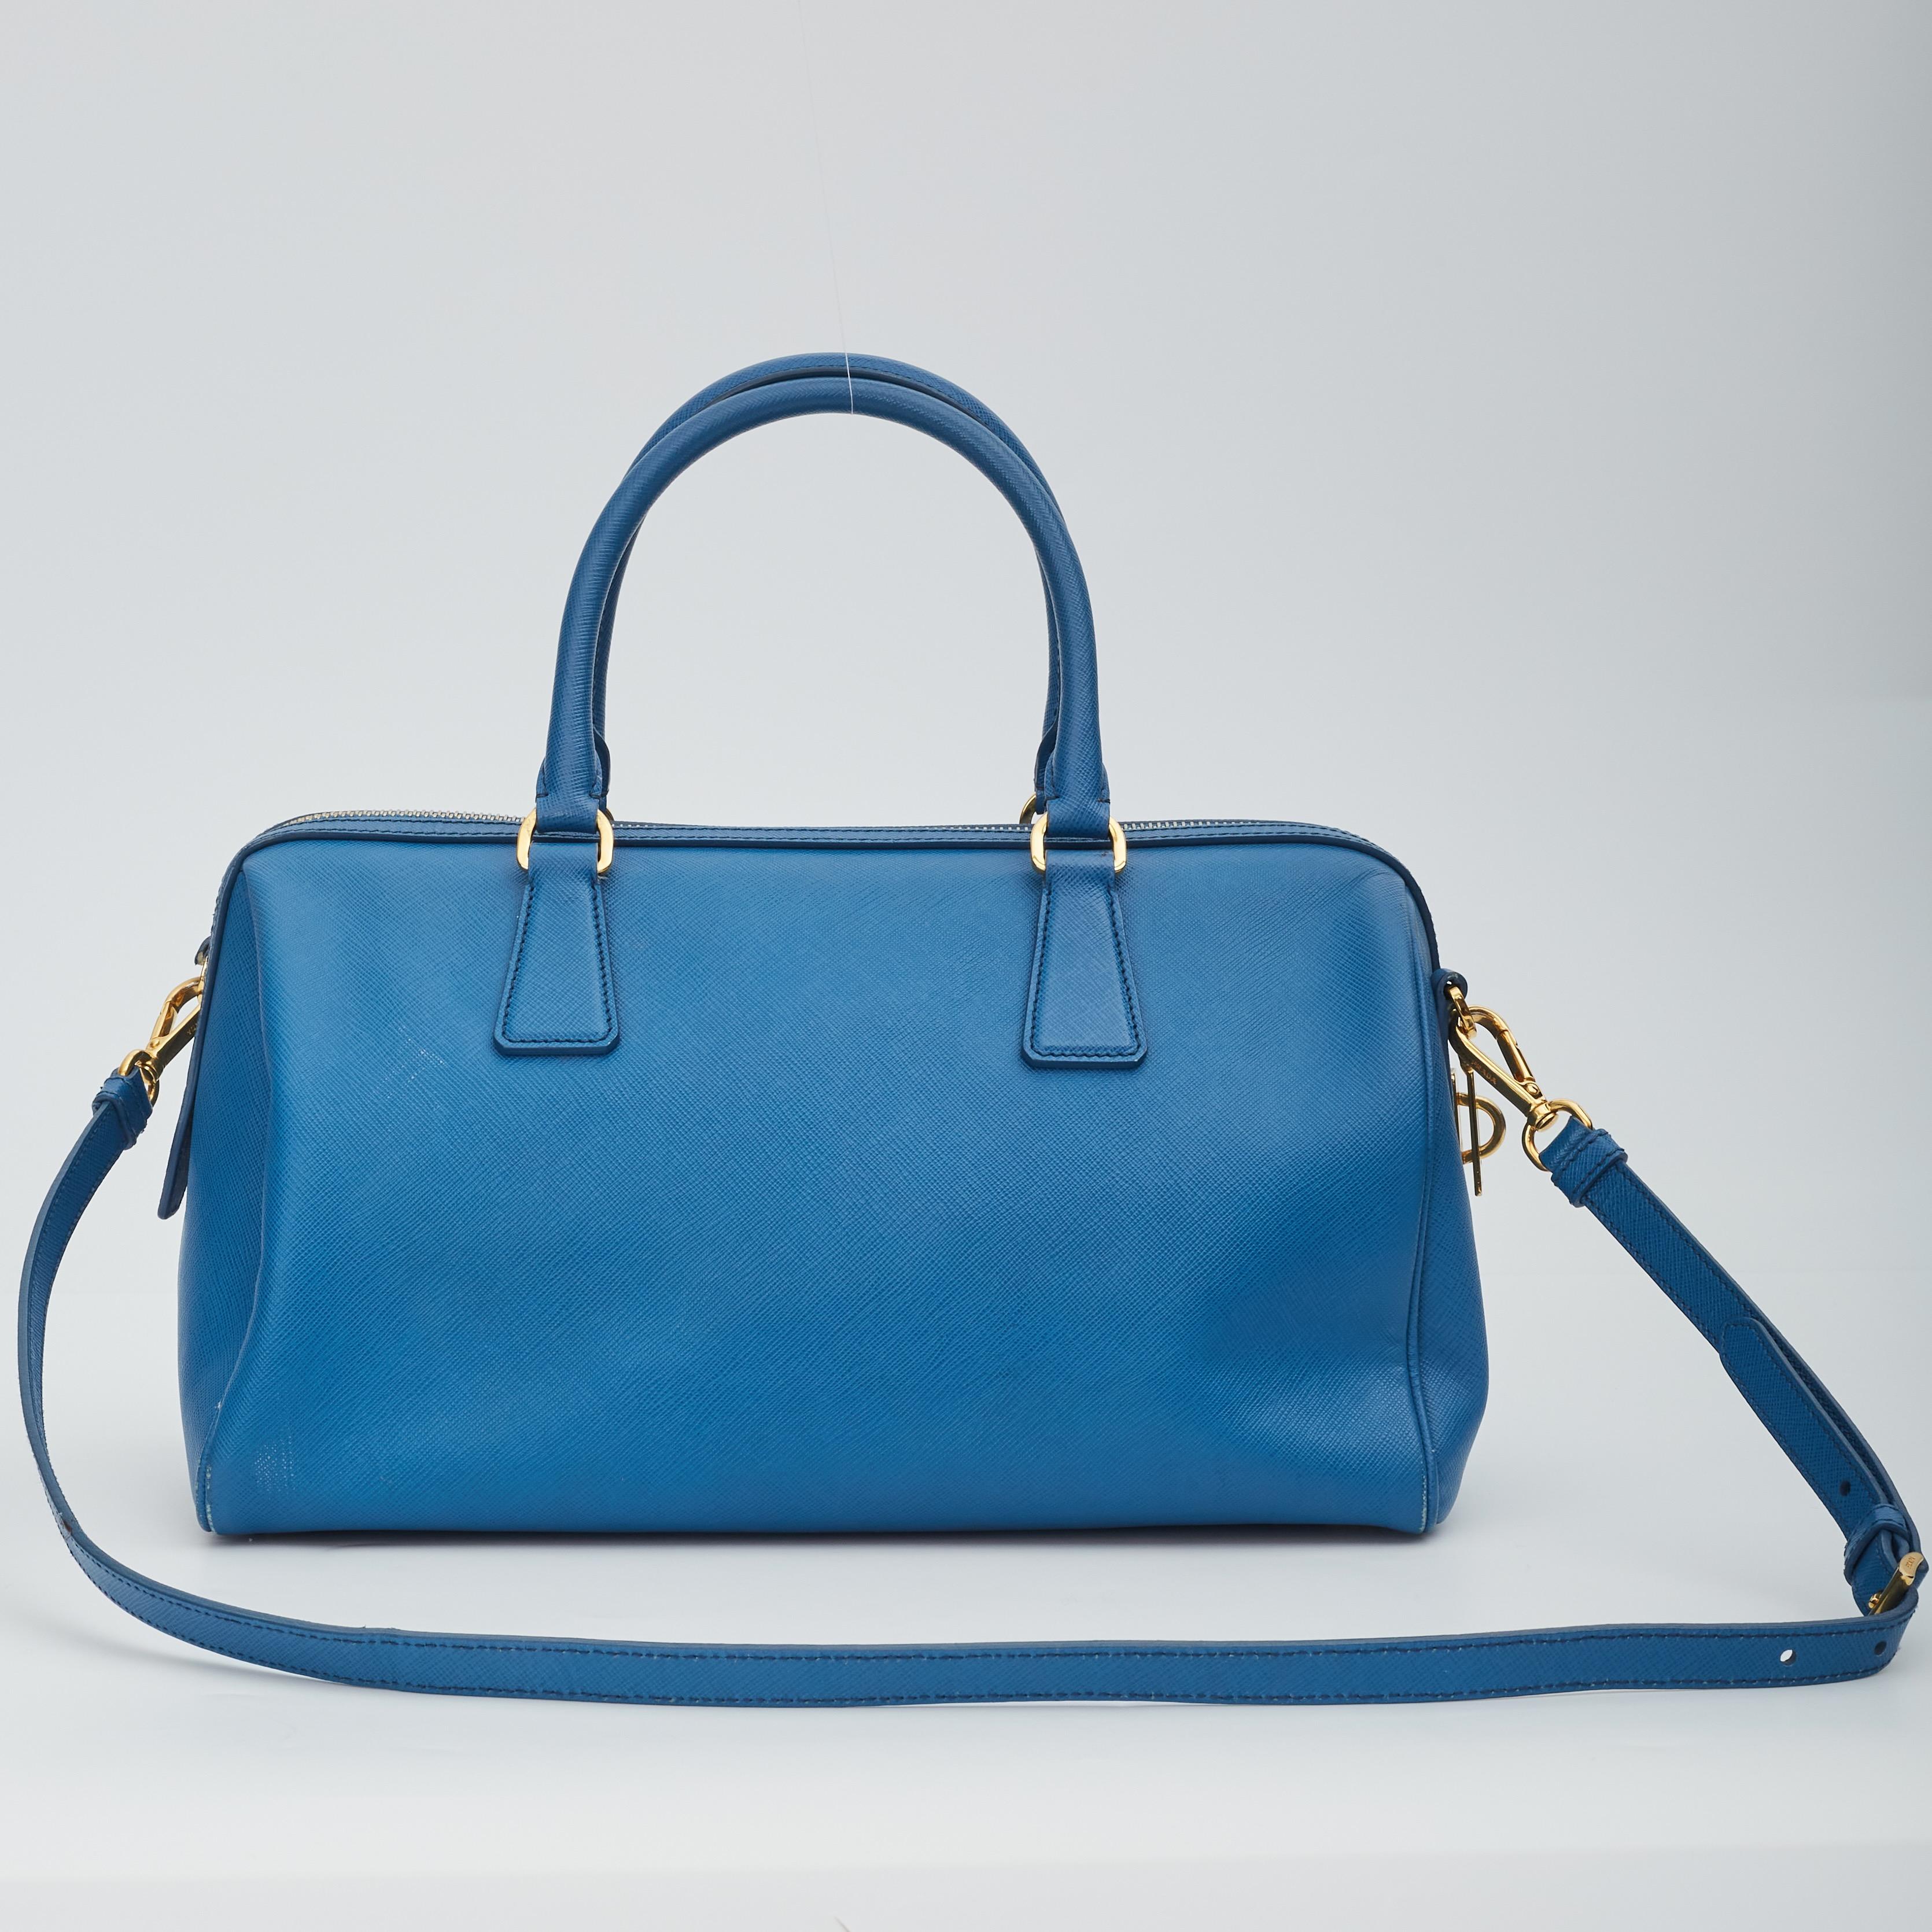 Farbe: Blau
MATERIAL: Saffiano-Leder
Artikel-Code: 25
Maße: H 8